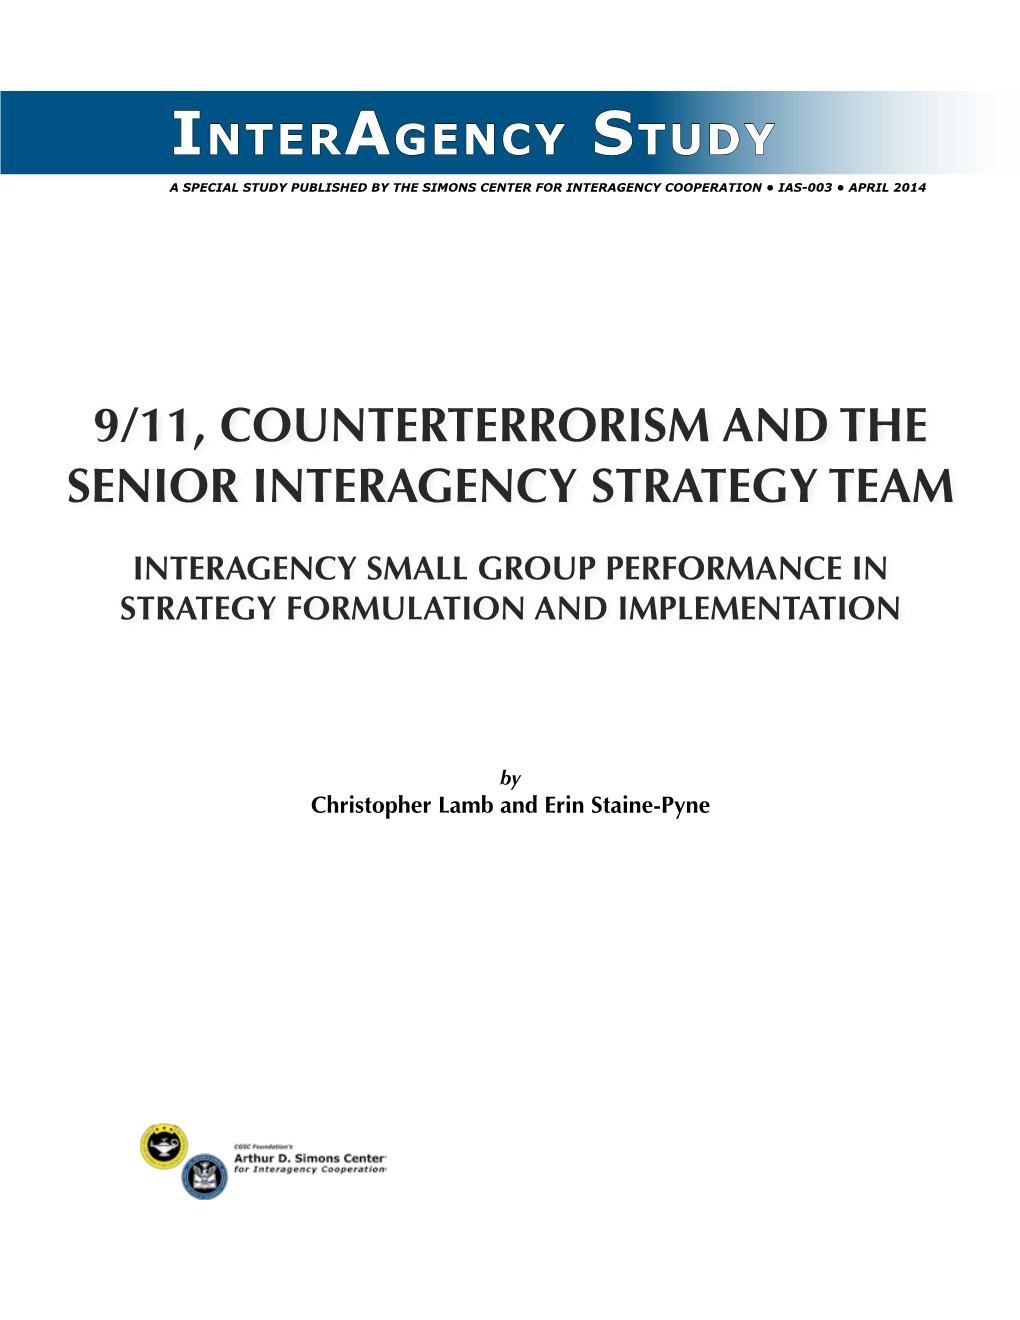 9/11, Counterterrorism and the Senior Interagency Strategy Team